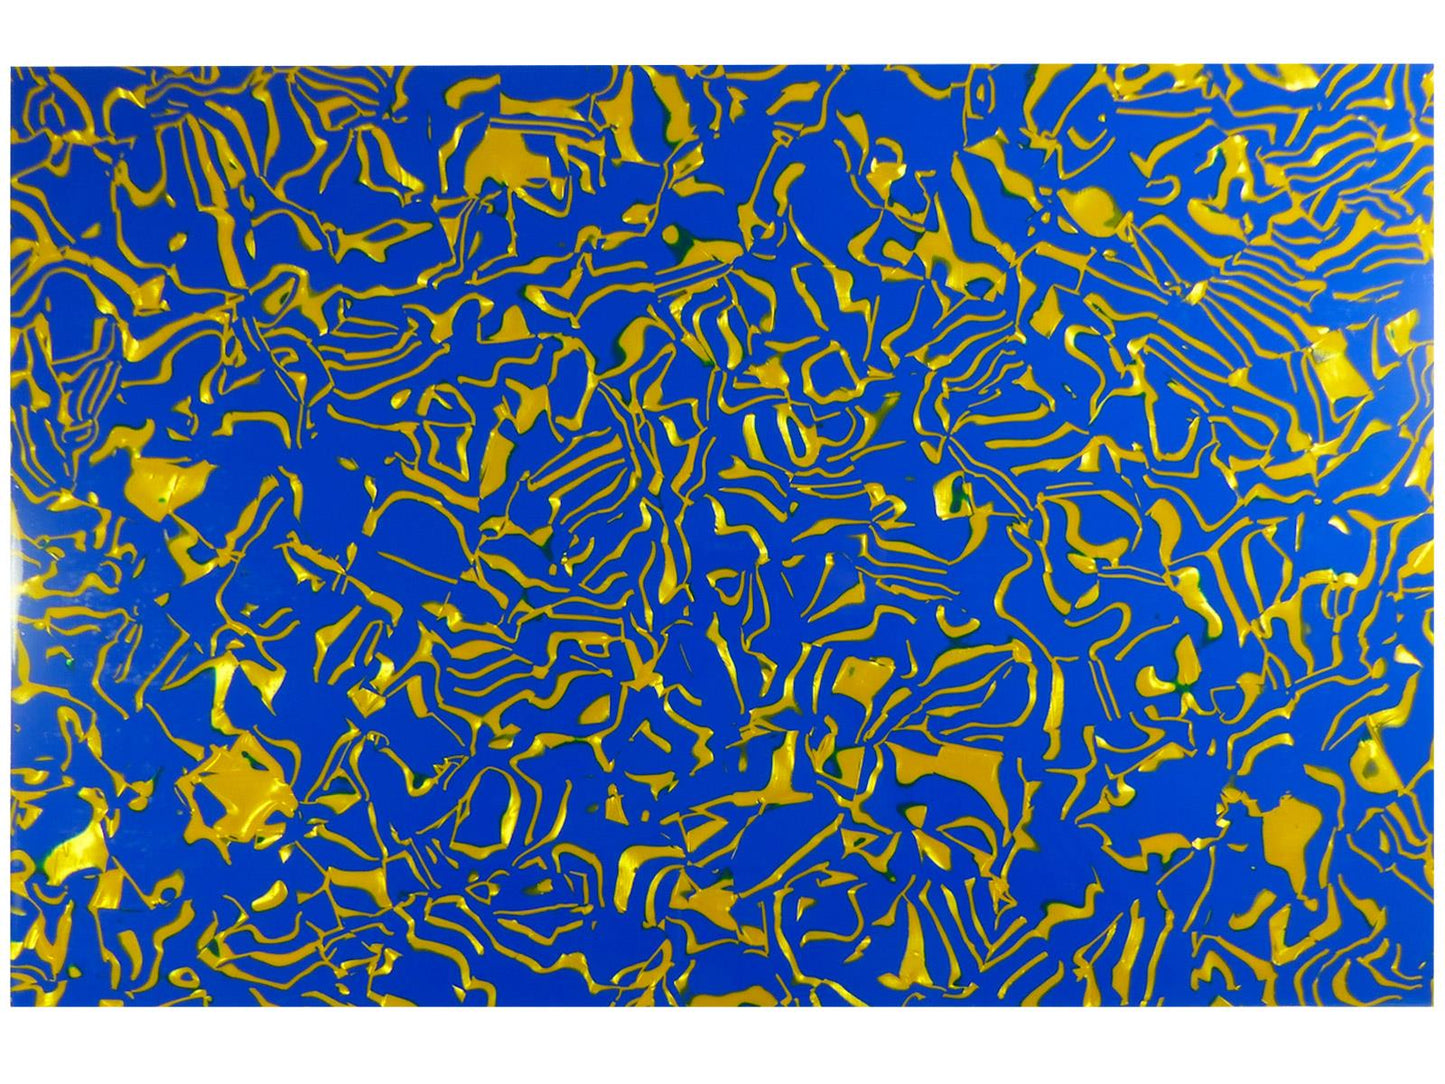 Borderlands Blue and Yellow Shell PVC Sheet - 430x290x2.5mm (16.9x11.42x0.1"), 4-Ply